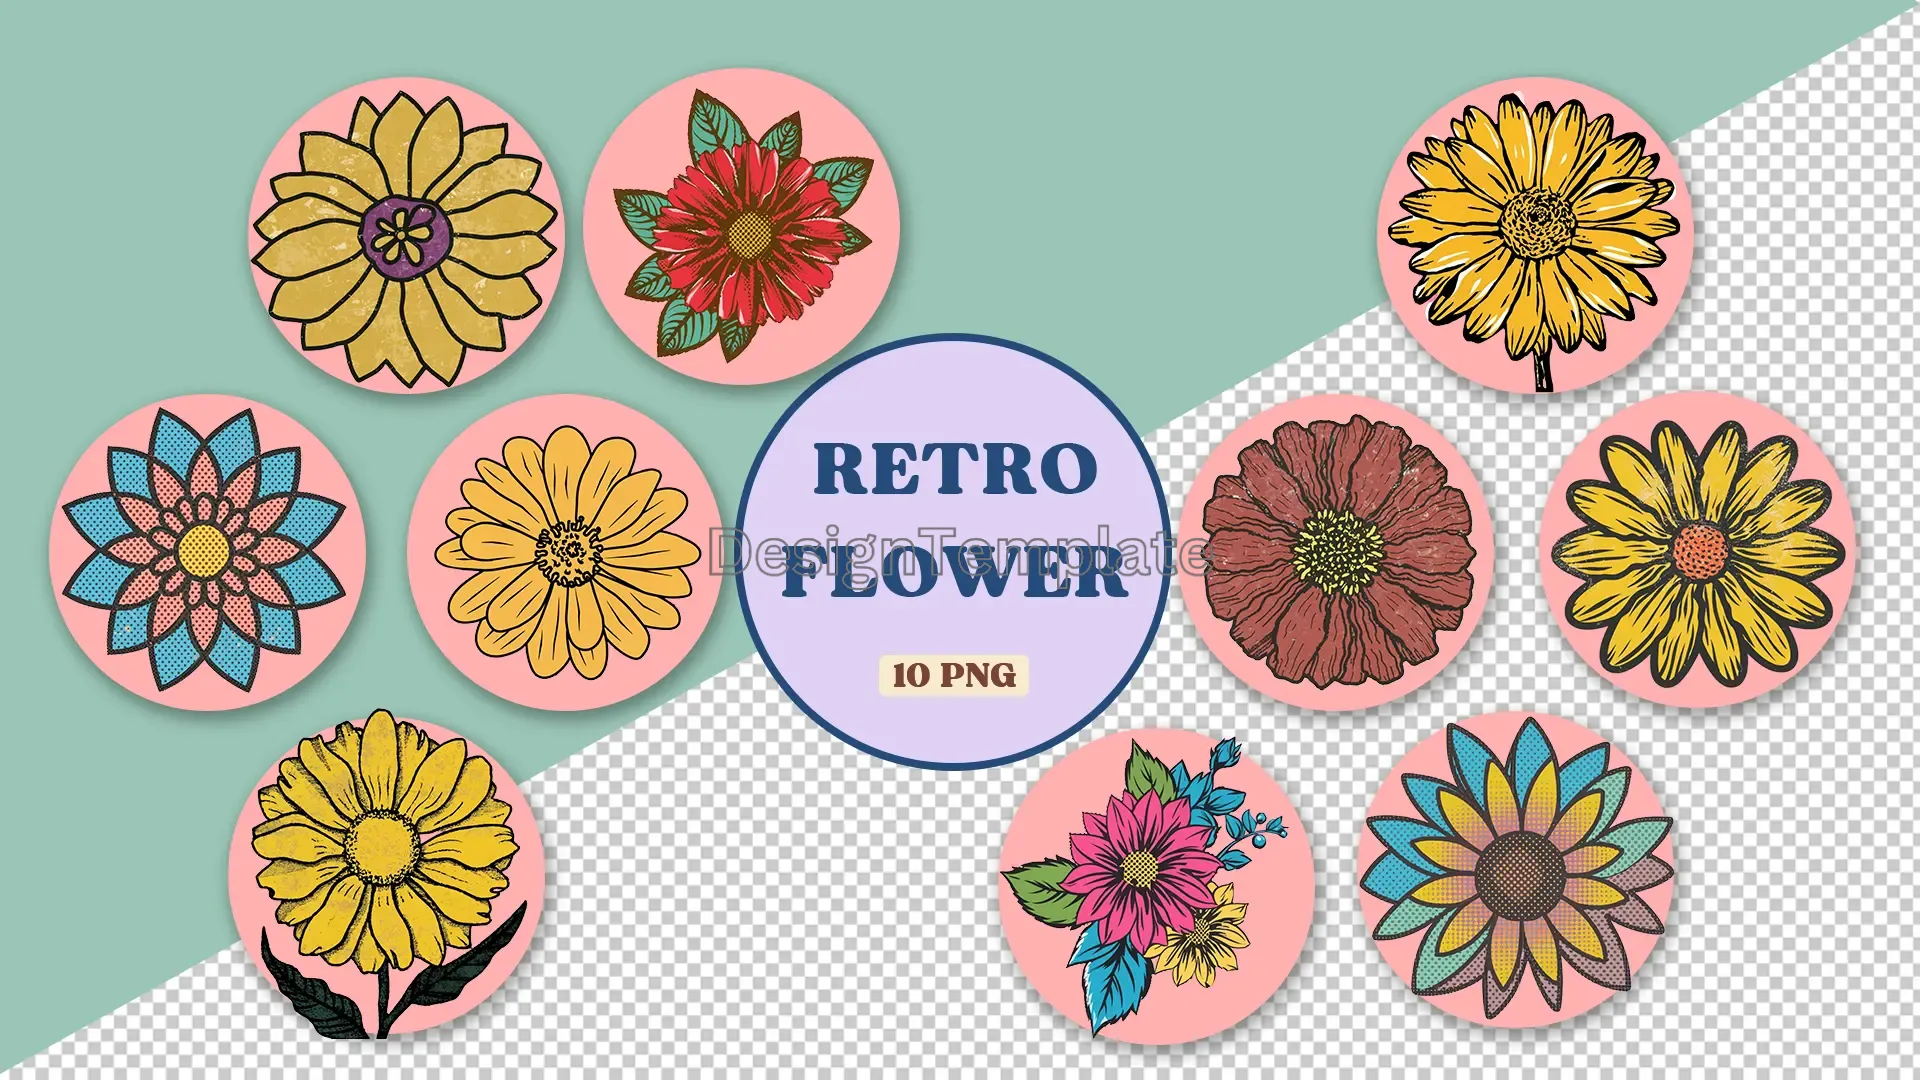 Vintage Floral Designs 3D Elements Pack